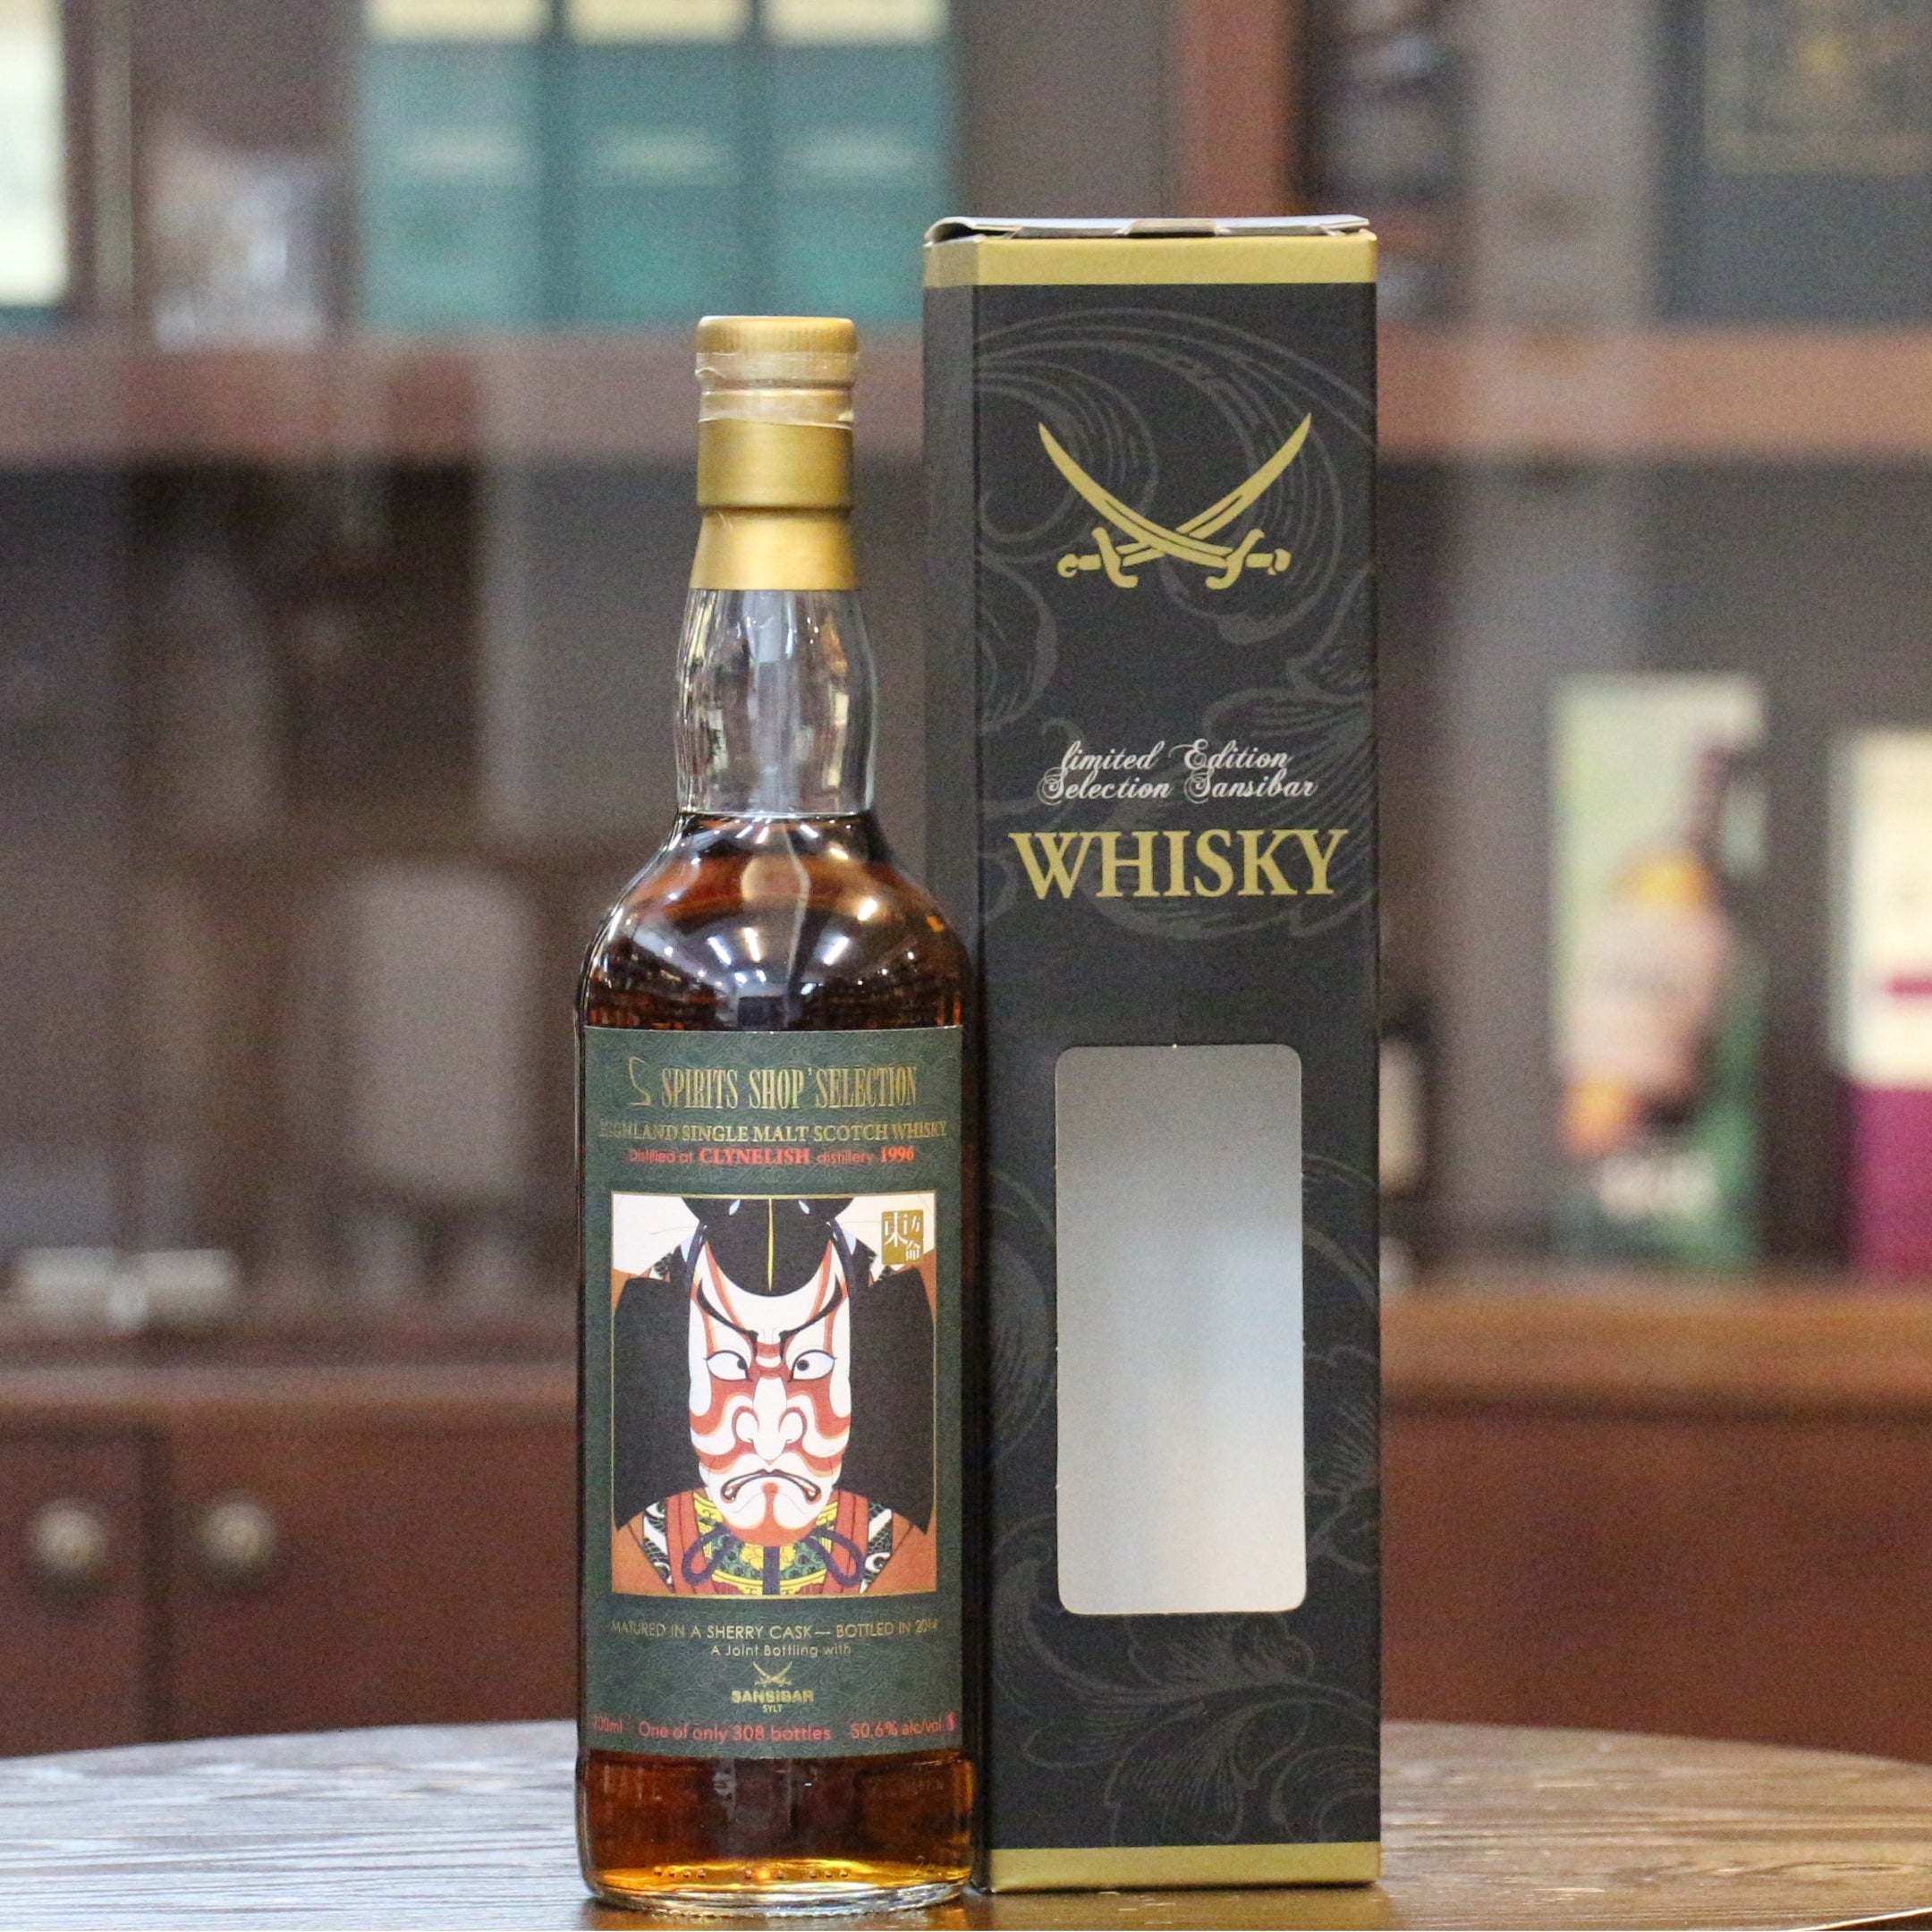 Clynelish 1996 18 year old | Spirits Shop Selection | Single Malt Scotch Whisky | Kingsbury | Scotland | Highlands 